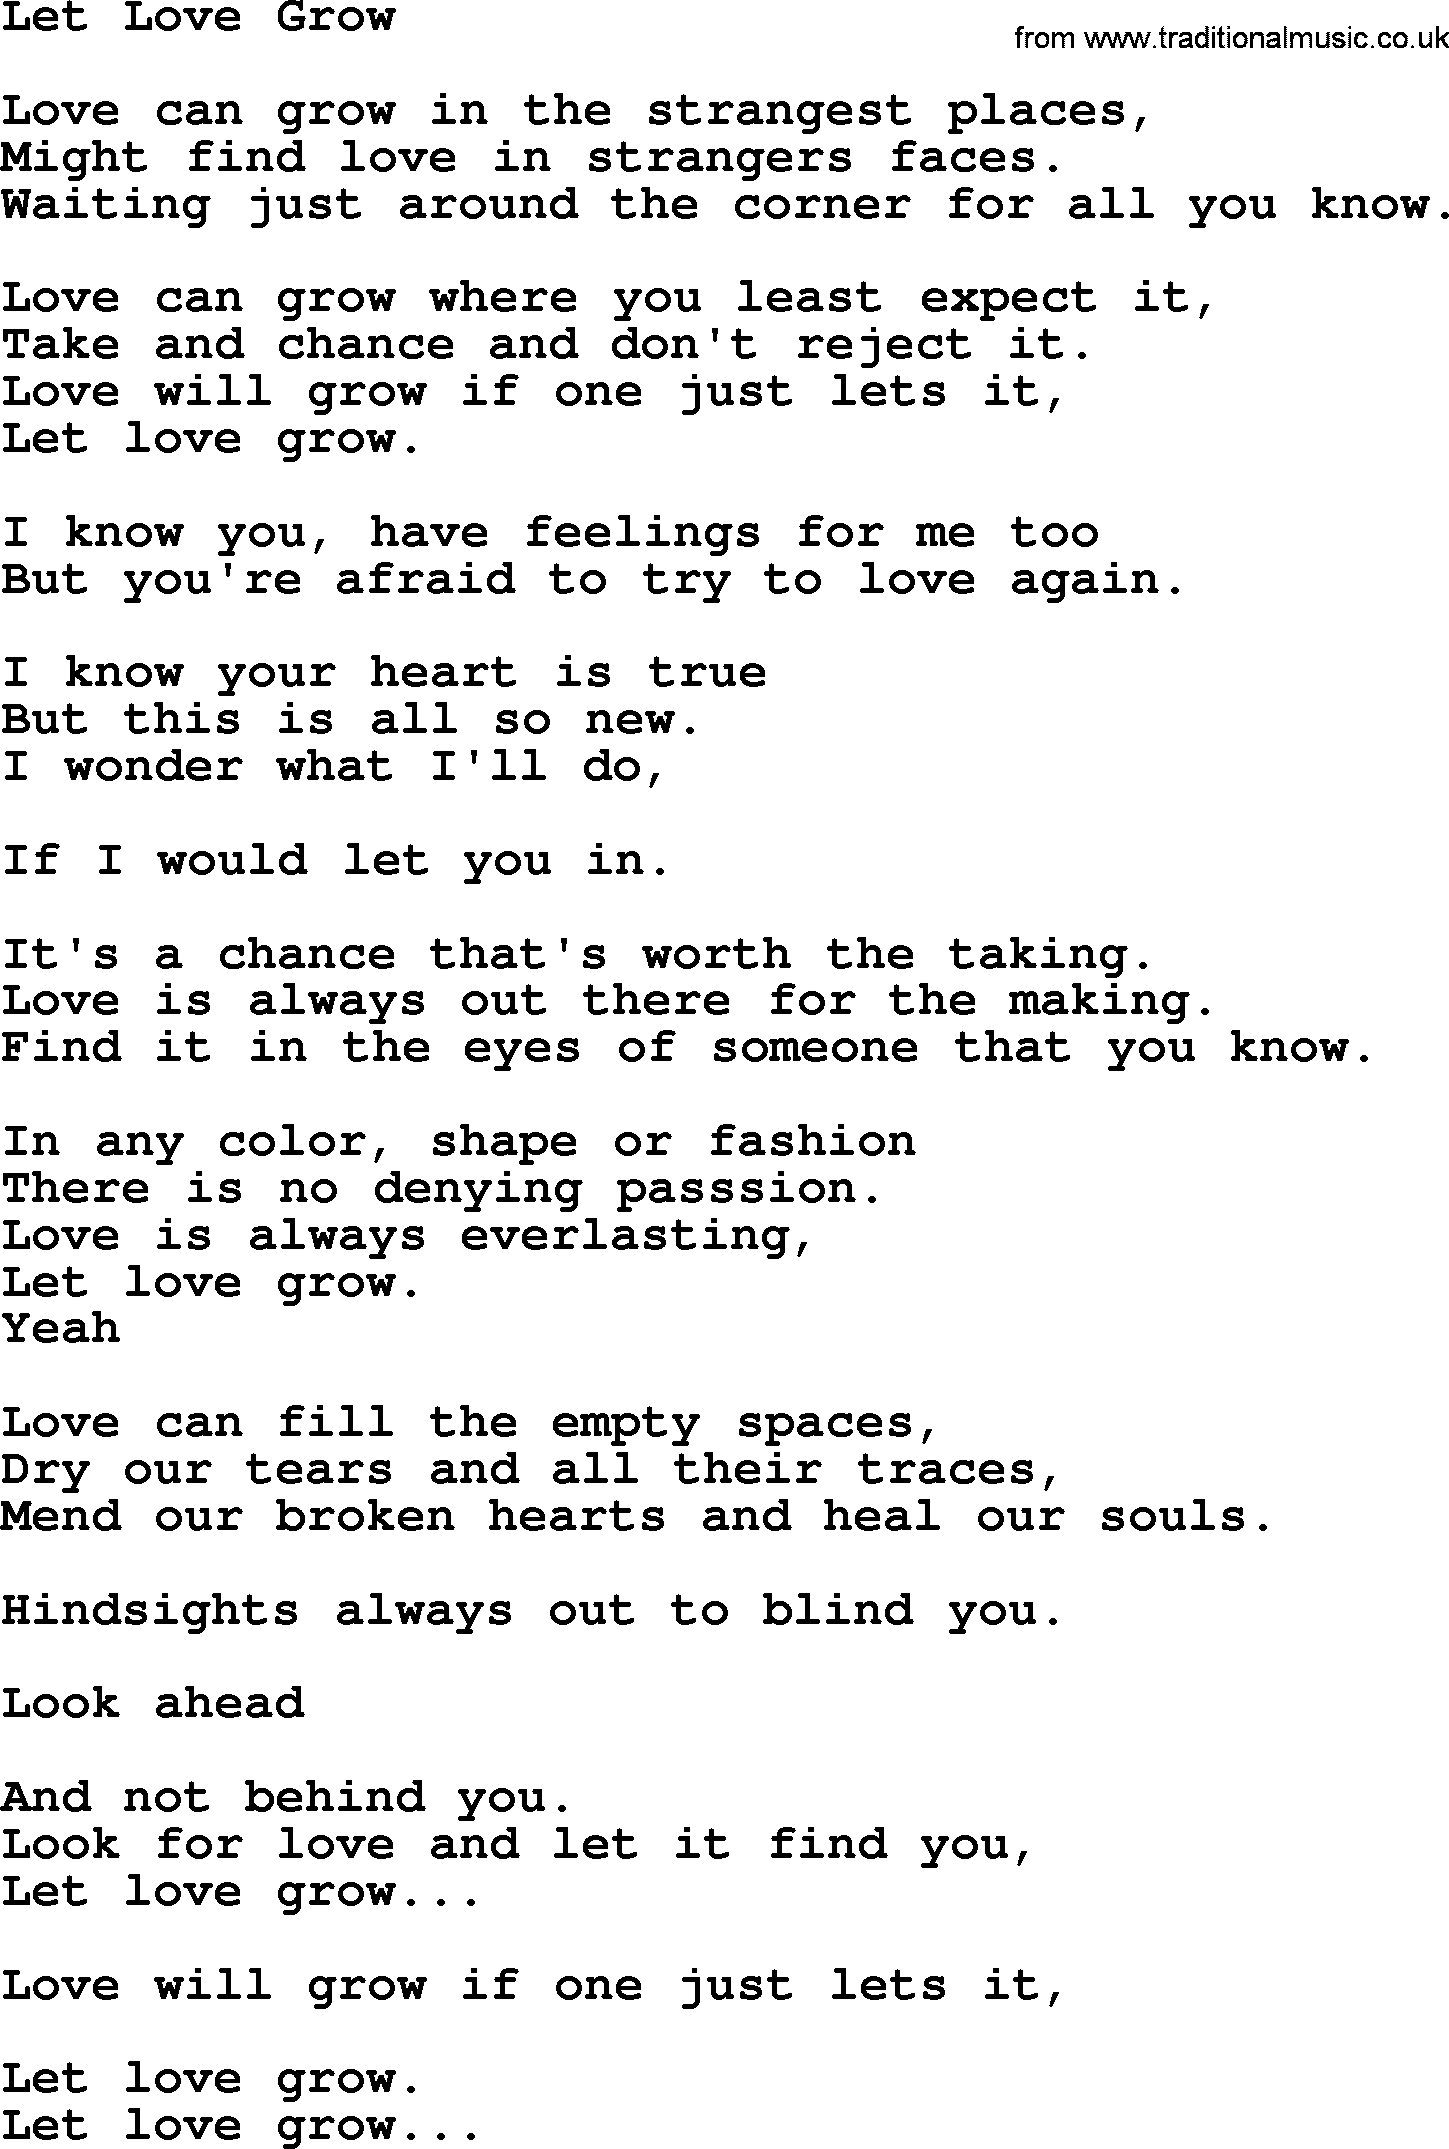 Dolly Parton song Let Love Grow.txt lyrics